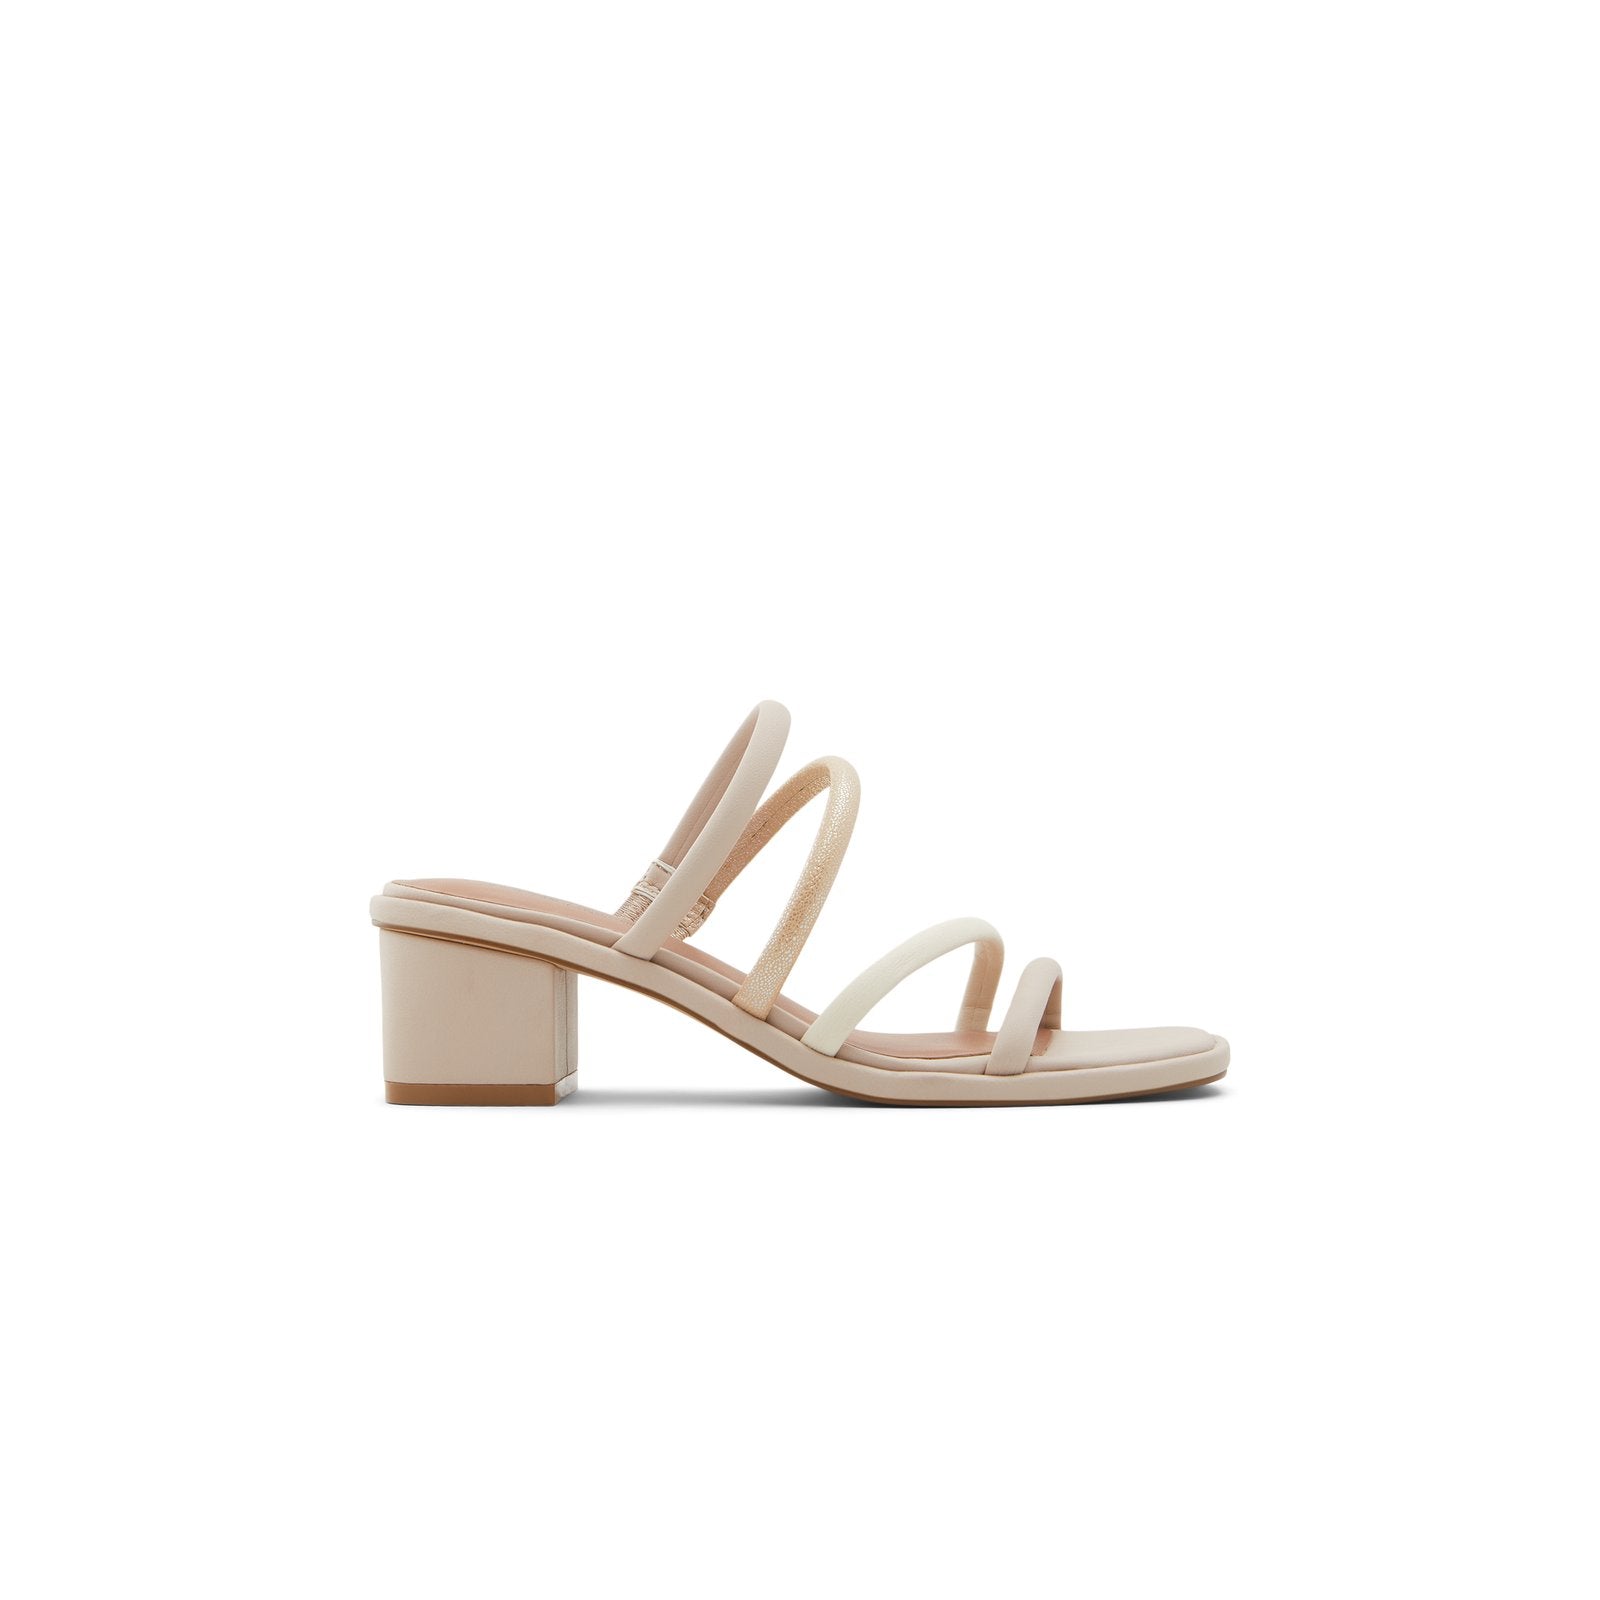 Pennelope / Heeled Sandals Women Shoes - Metallic Multi - CALL IT SPRING KSA